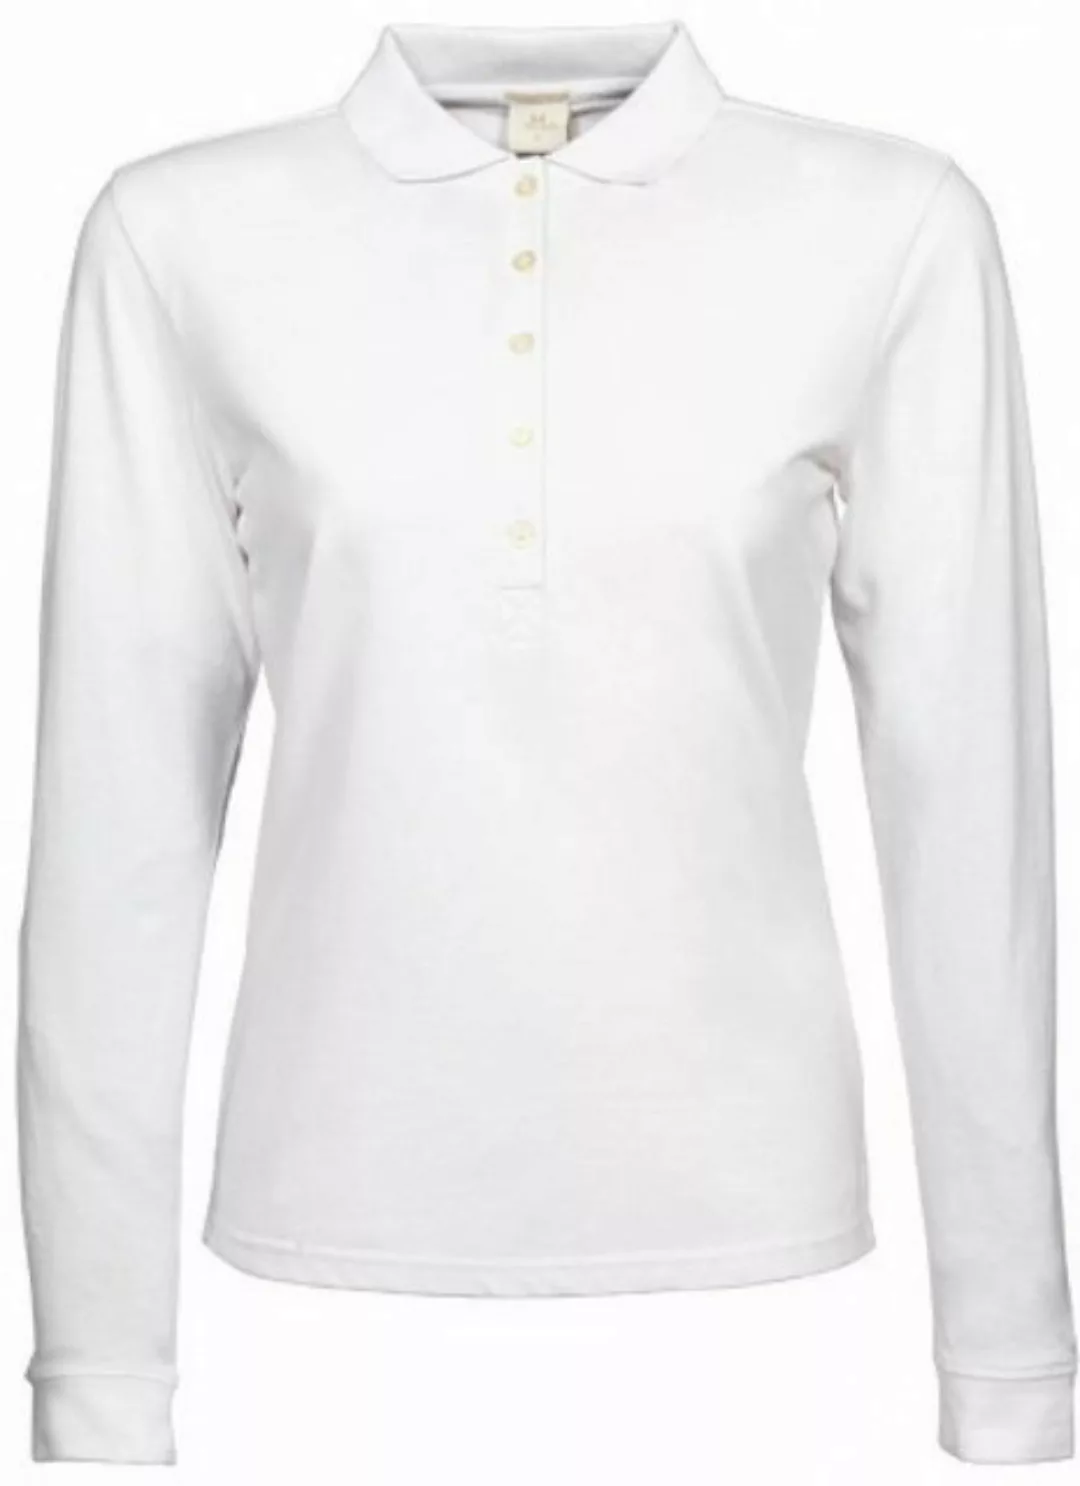 Tee Jays Langarm-Poloshirt Ladies Stretch Long Sleeve Poloshirt günstig online kaufen